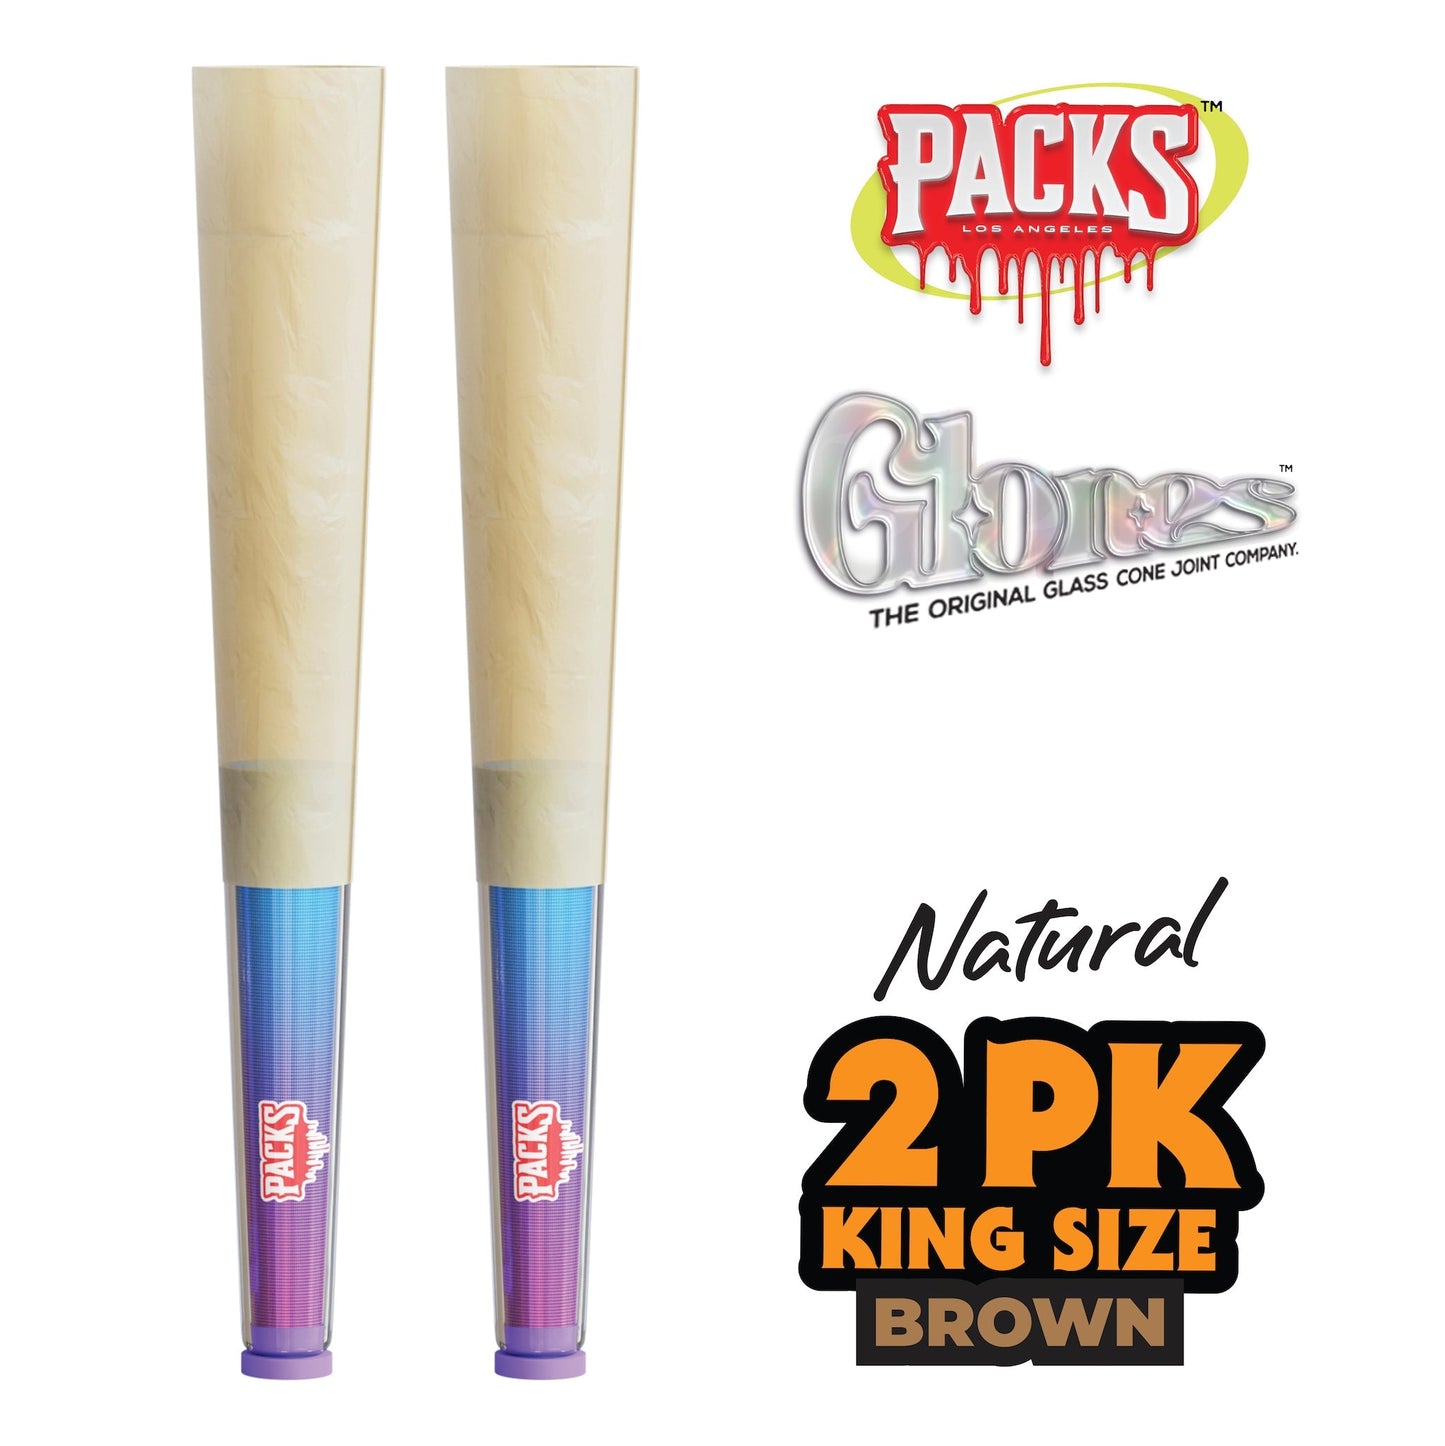 Packwoods Glones King Size Brown